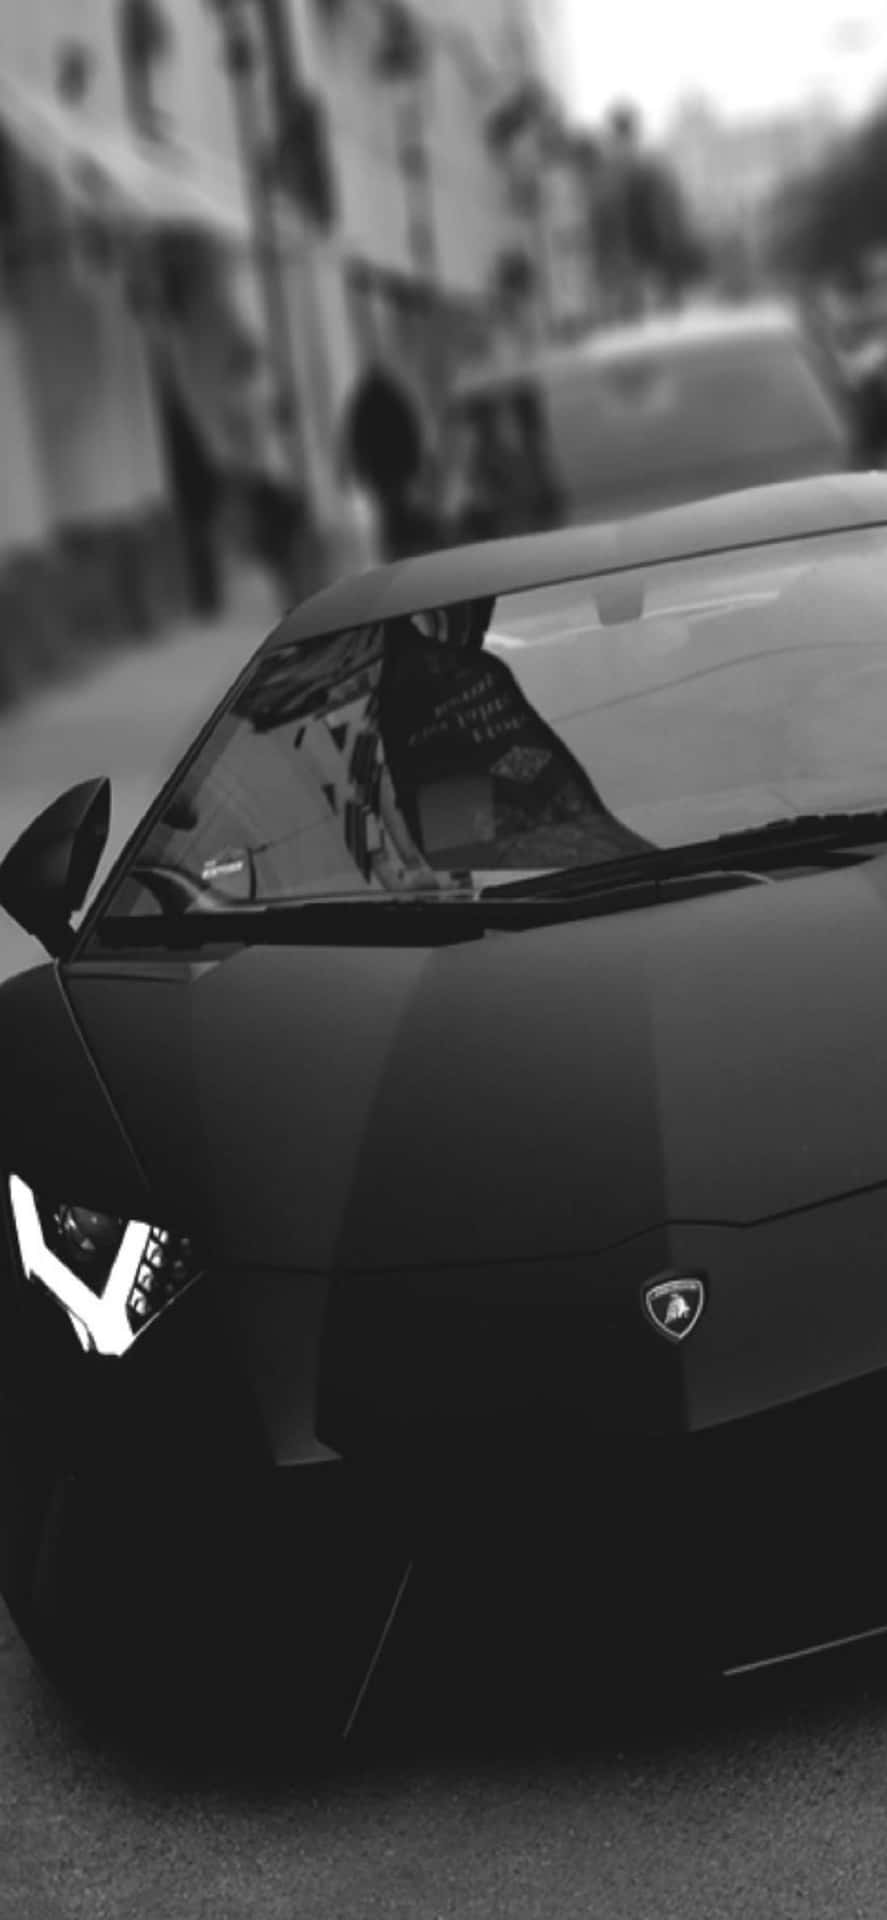 Feel the power of the Lamborghini on iPhone X